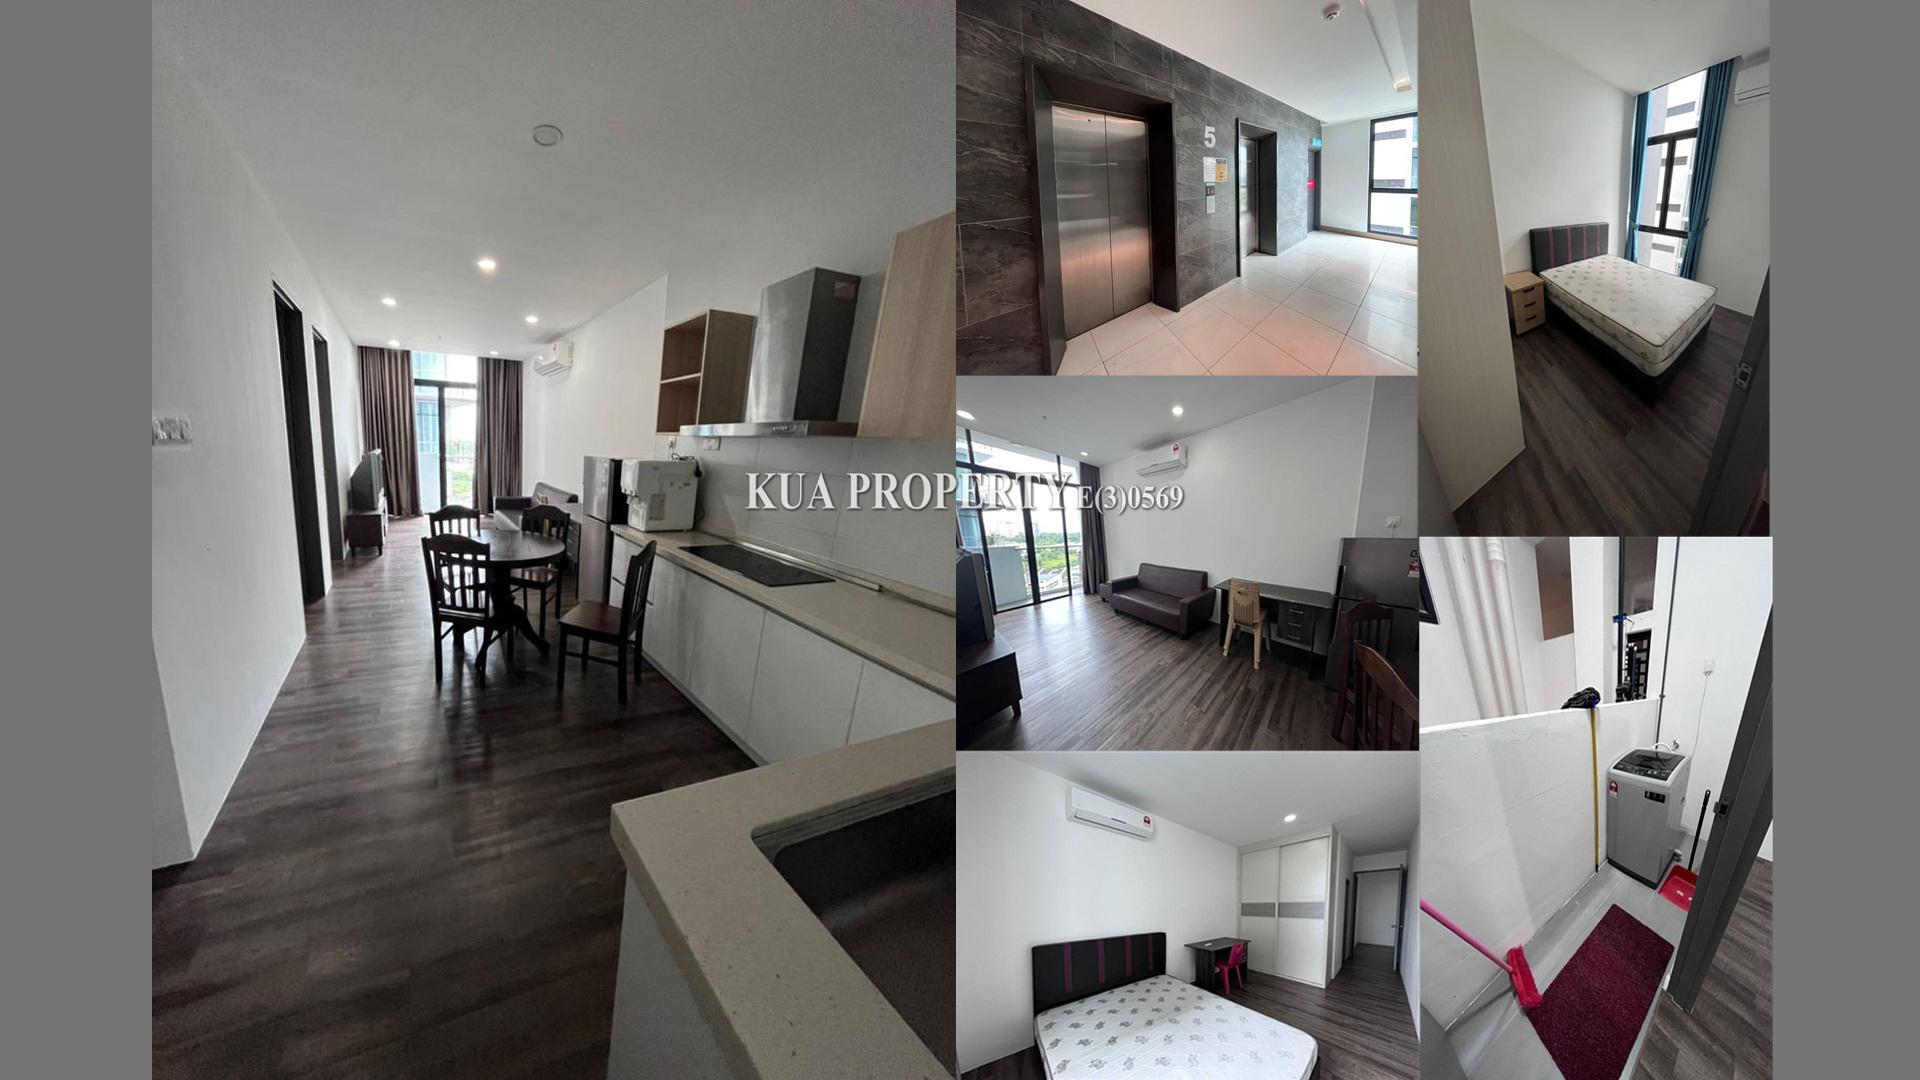 HK Square Stapok Apartment For Rent!